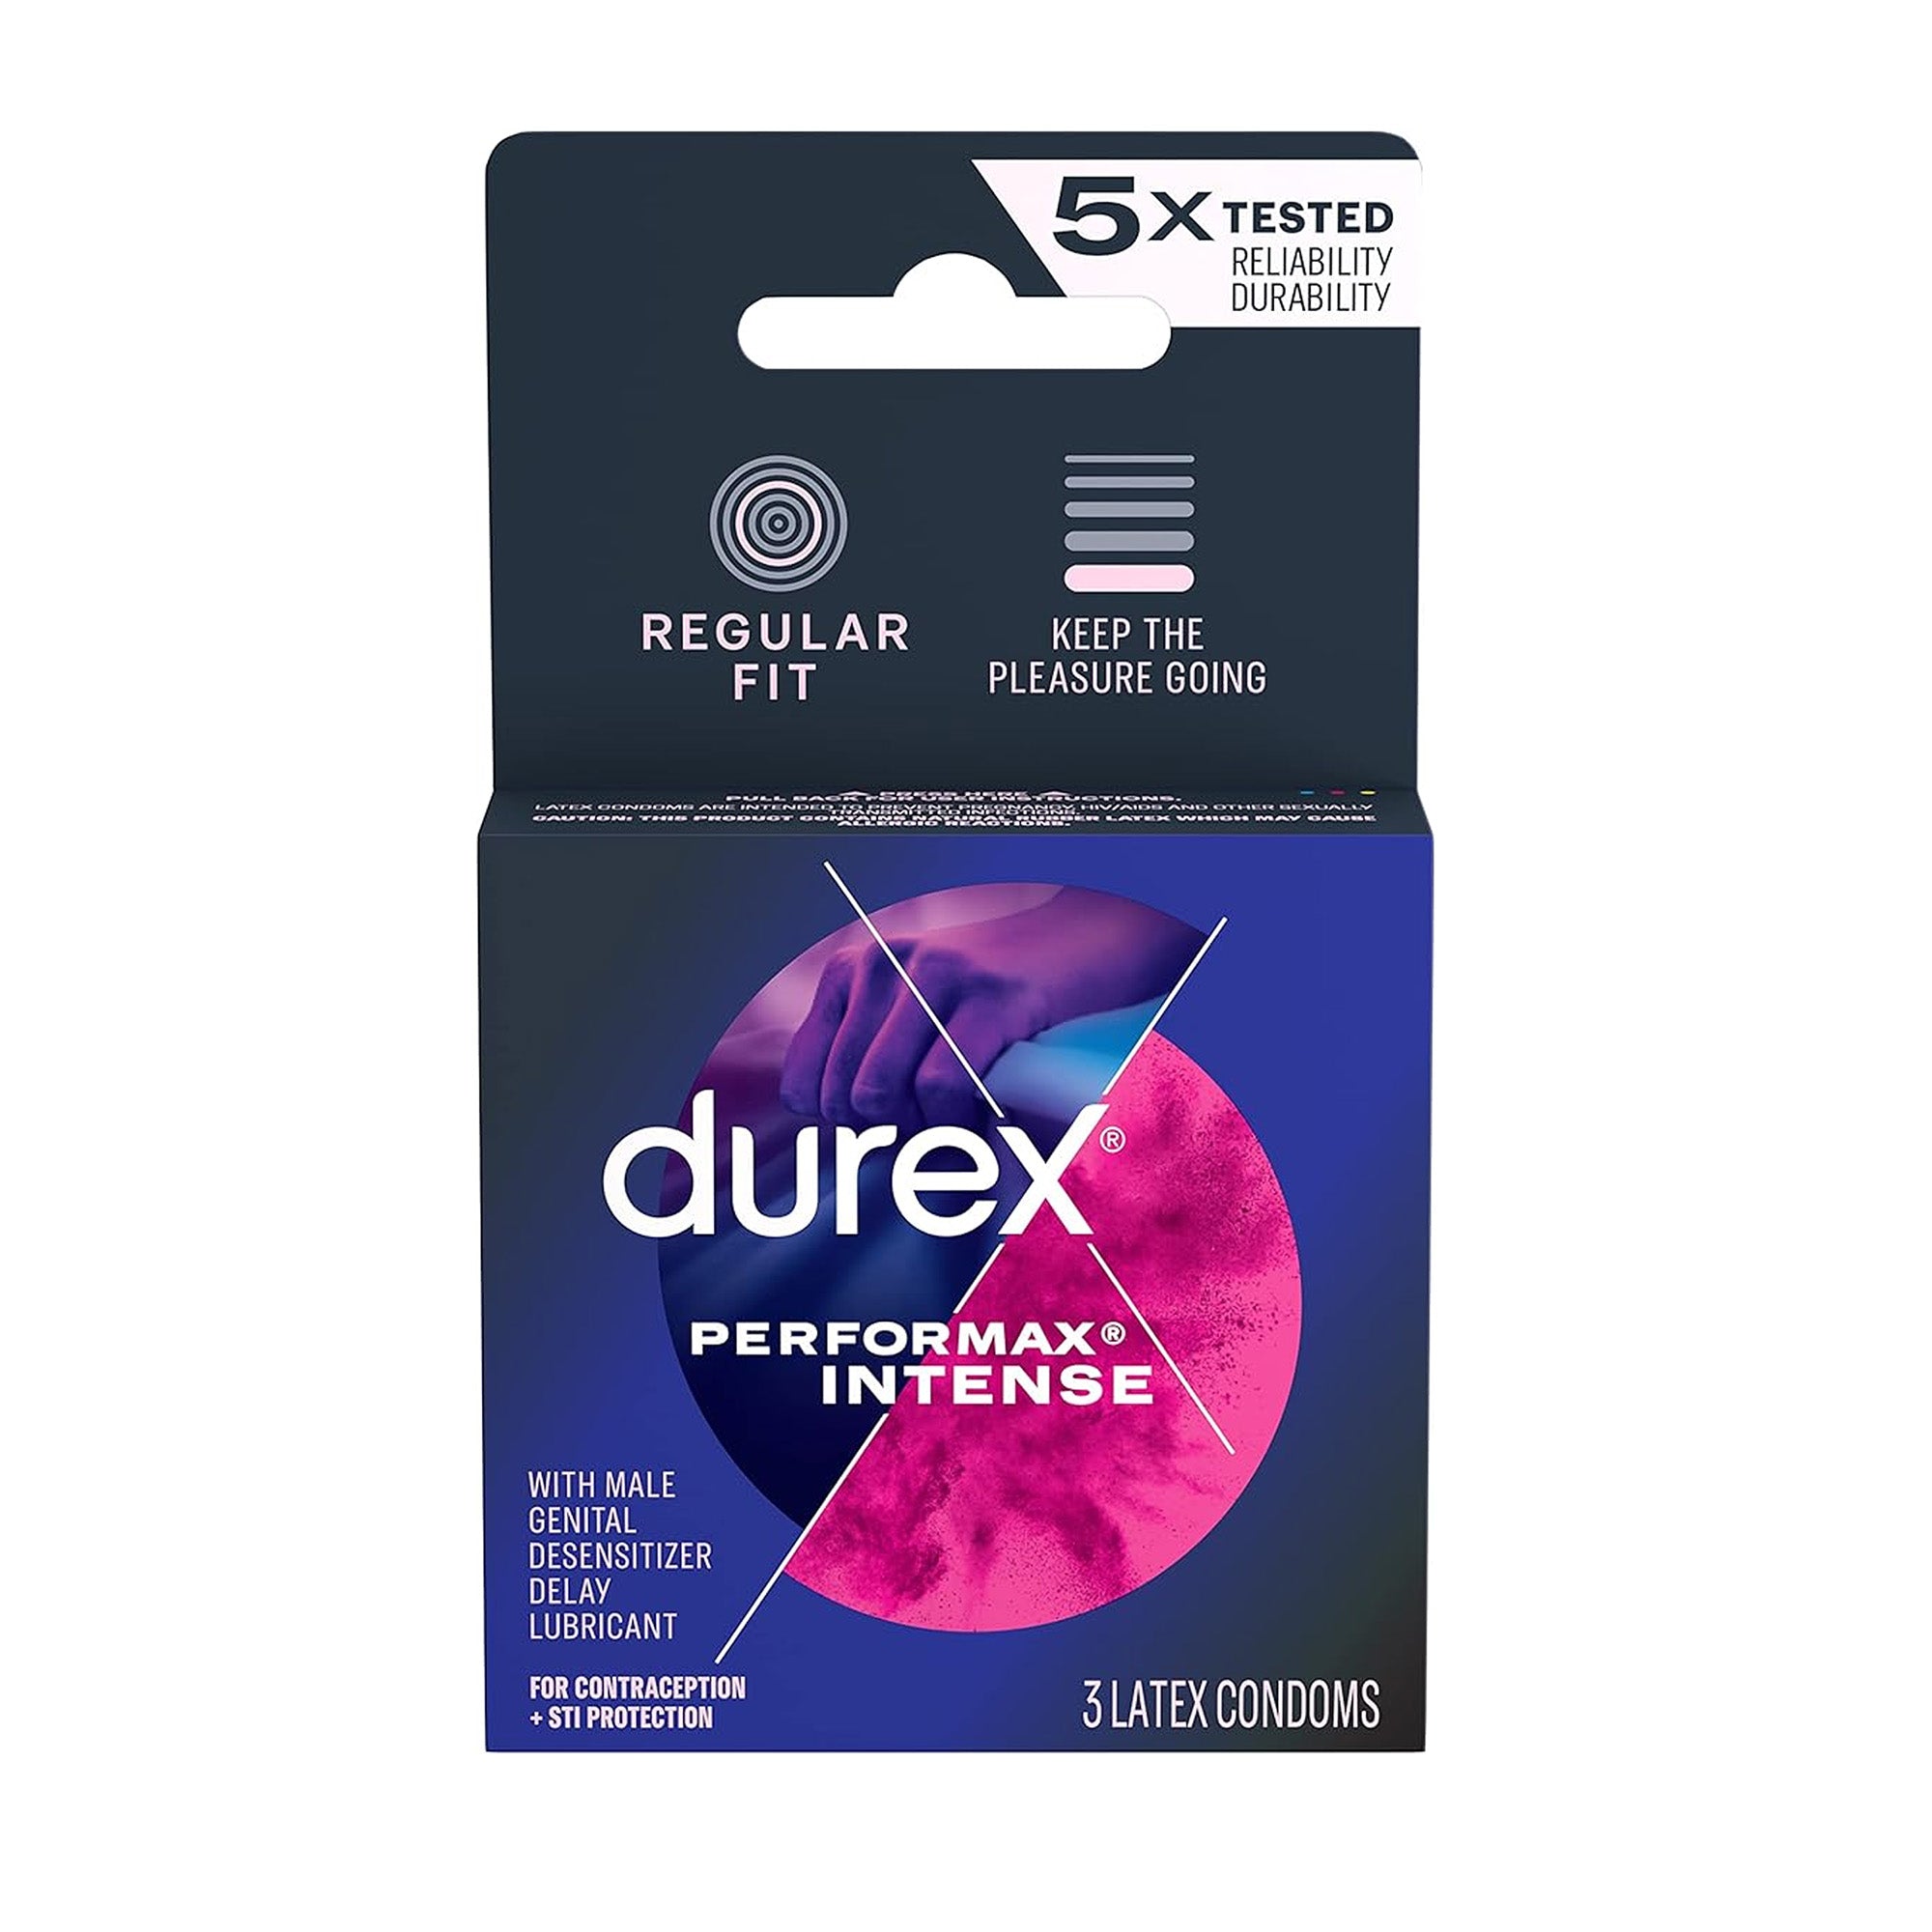 Durex Performance Intense Condom - Box of 3